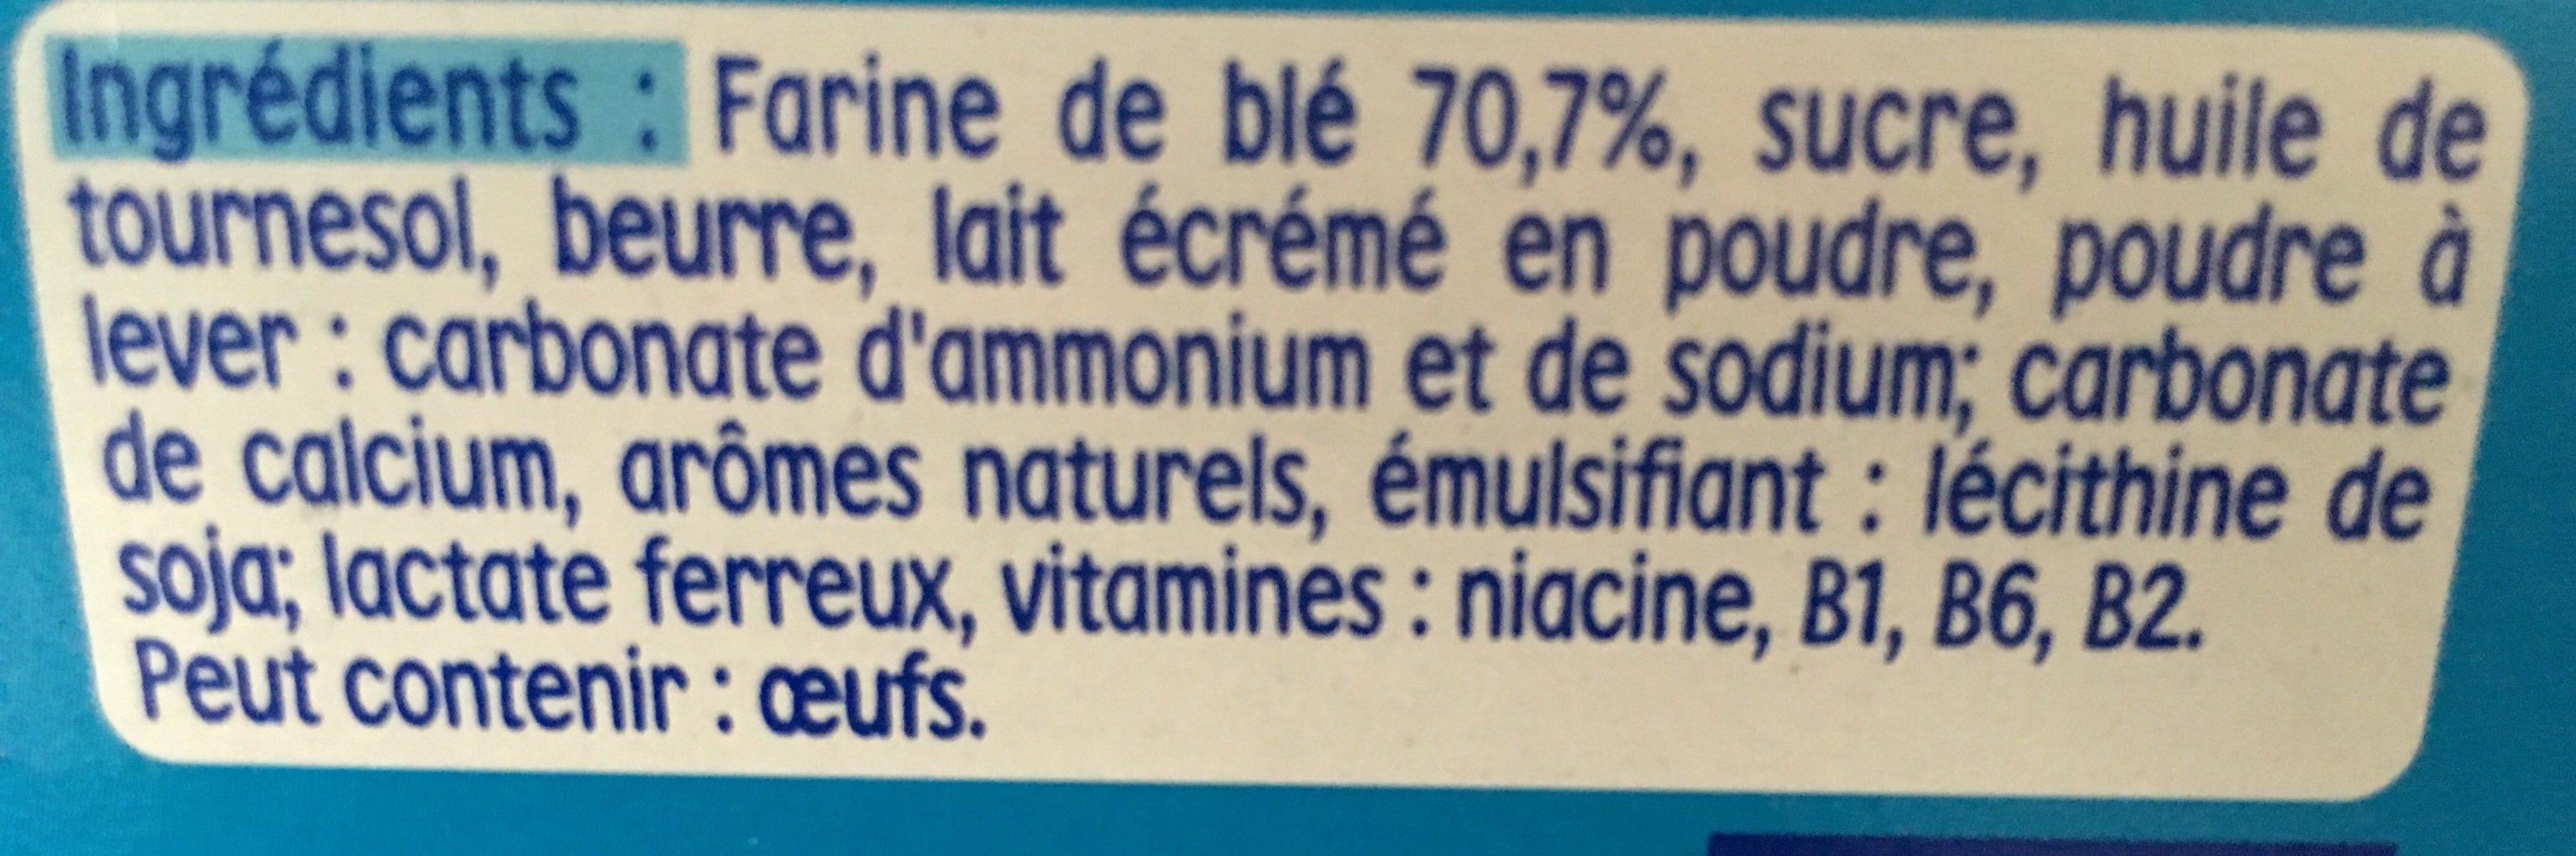 P'TIT BISCUIT - Ingredients - fr